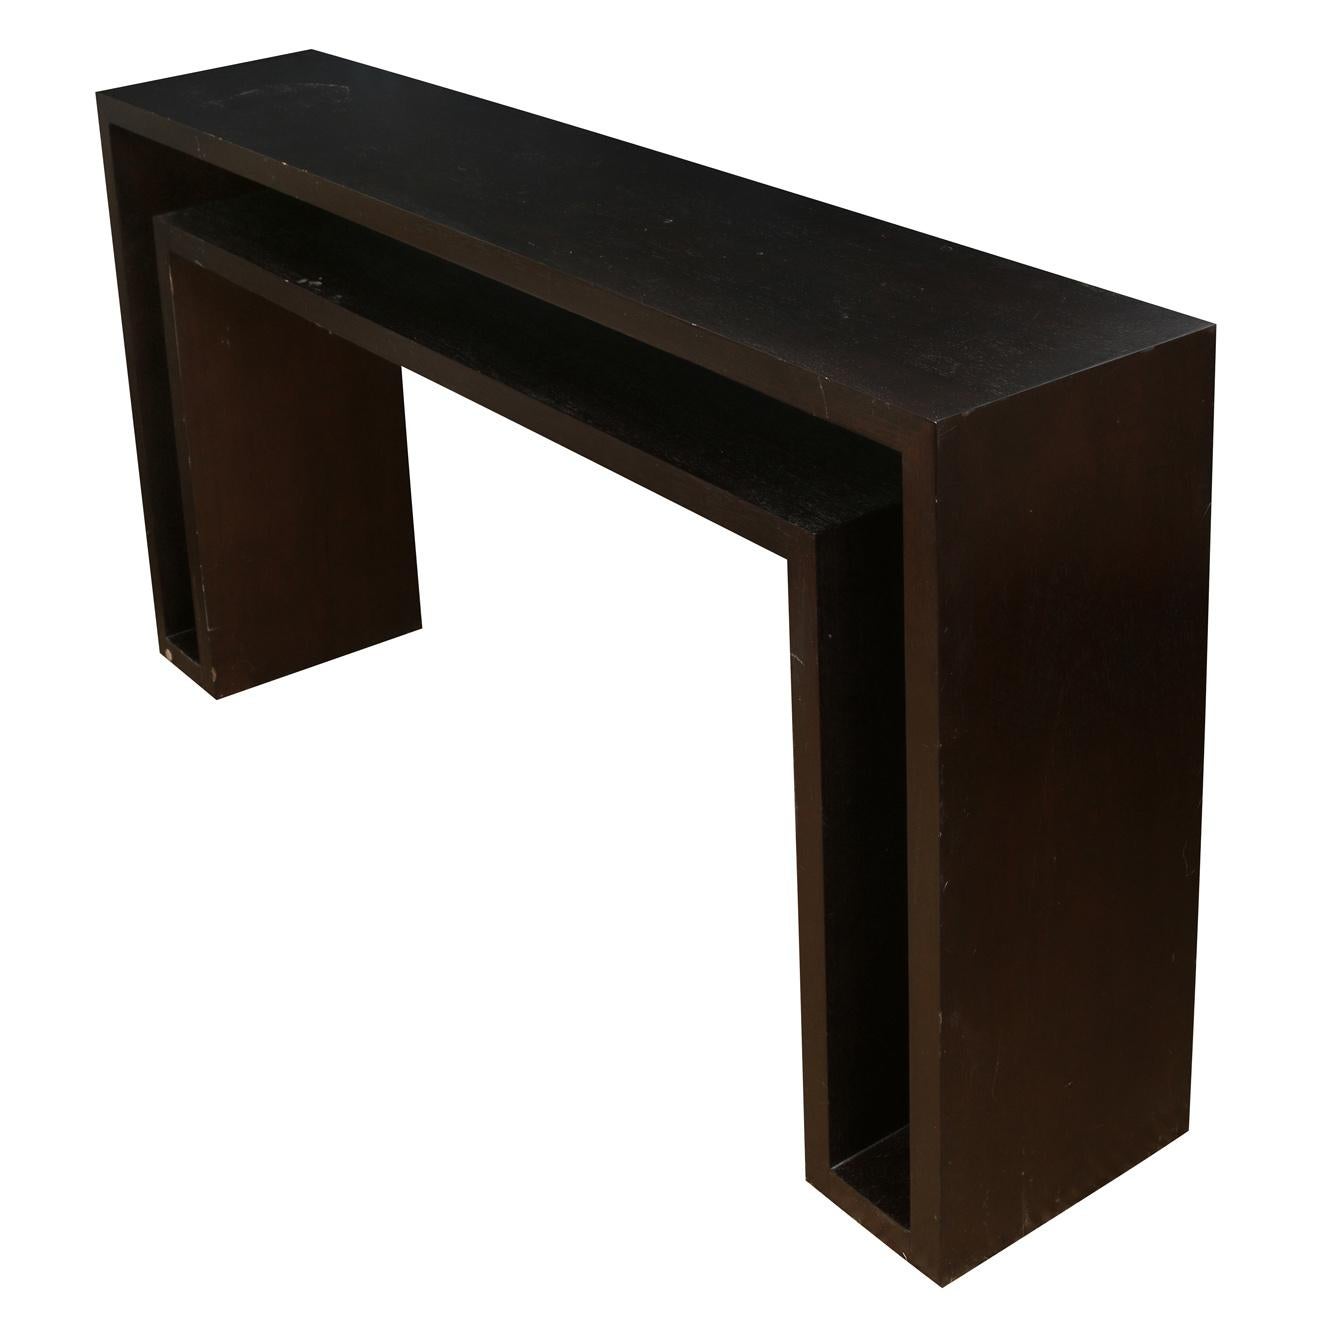 A modern ebonized cerused oak console table with open angular design.